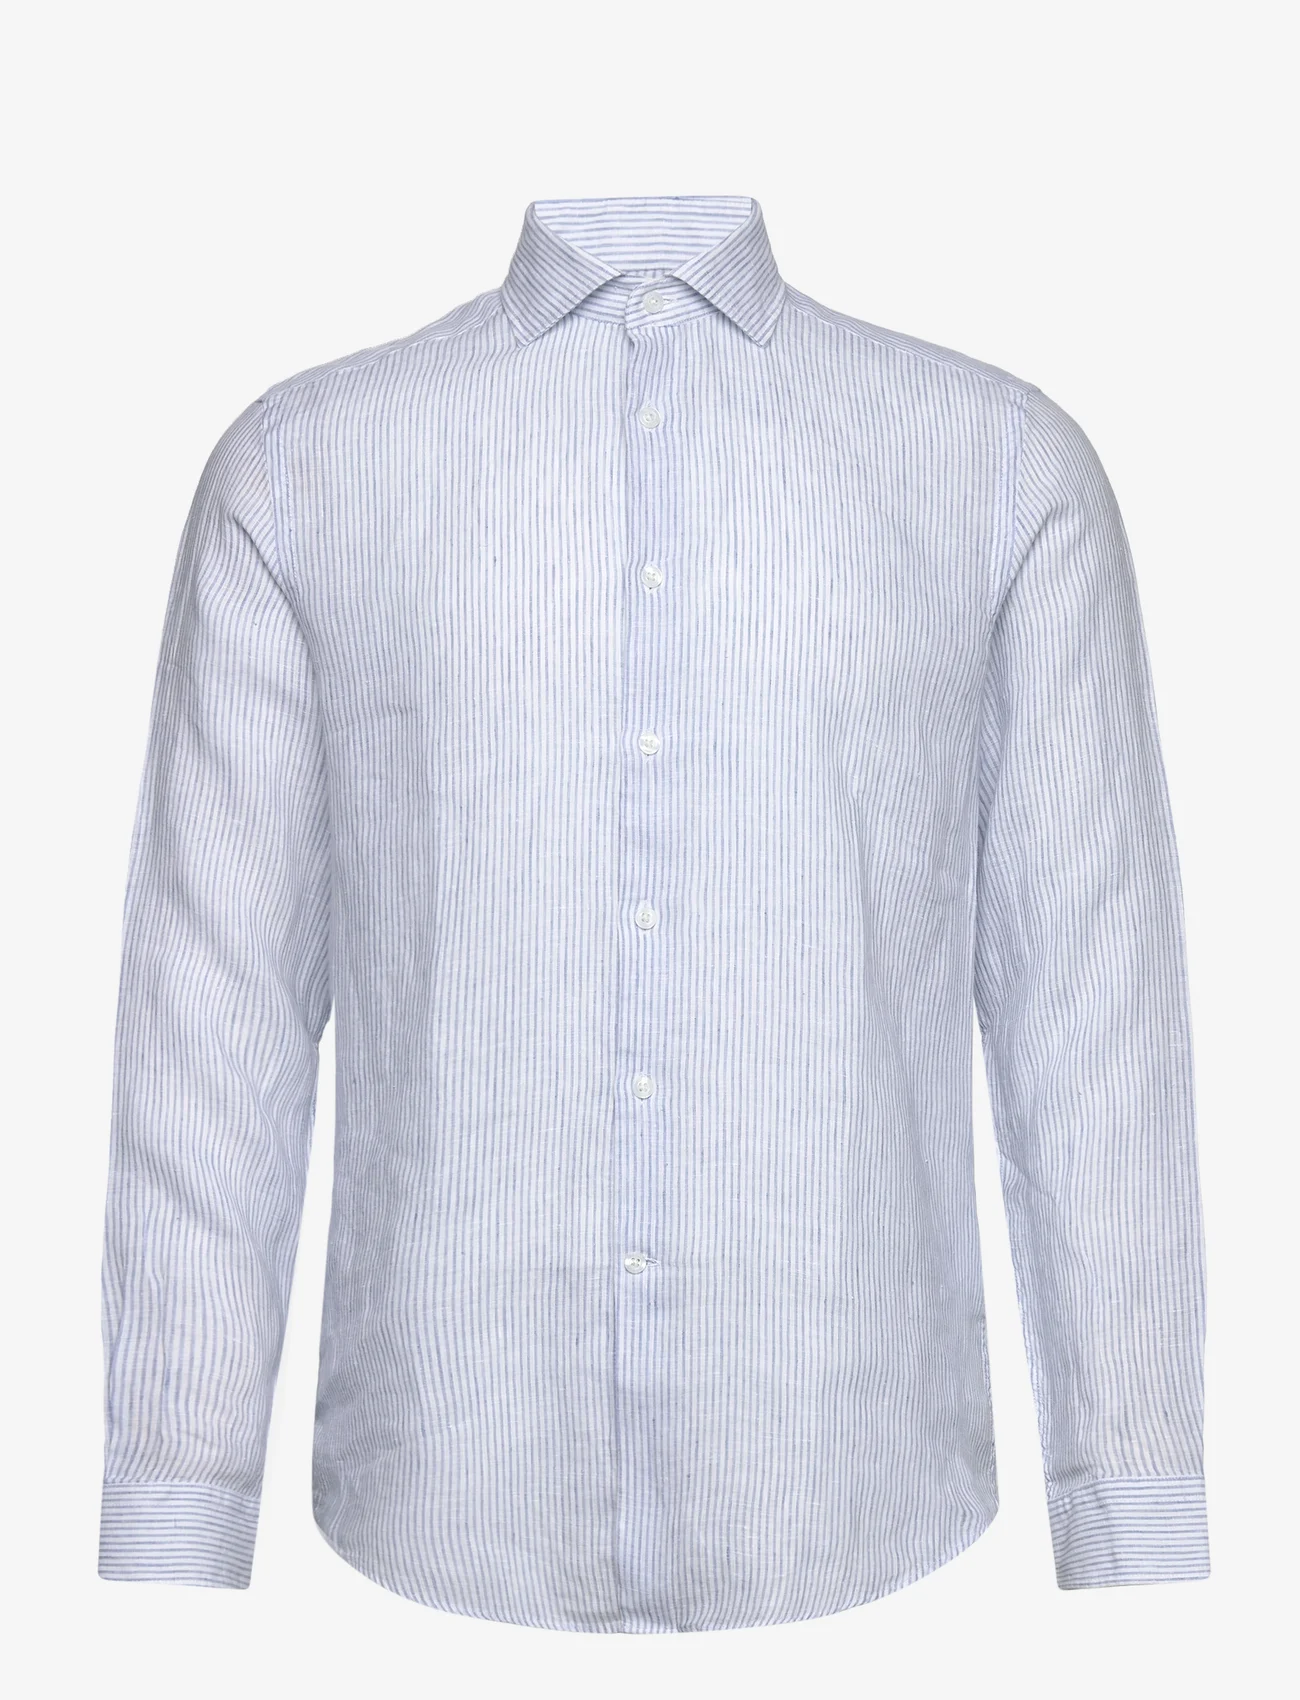 Reiss - RUBAN - koszule lniane - soft blue fine - 0